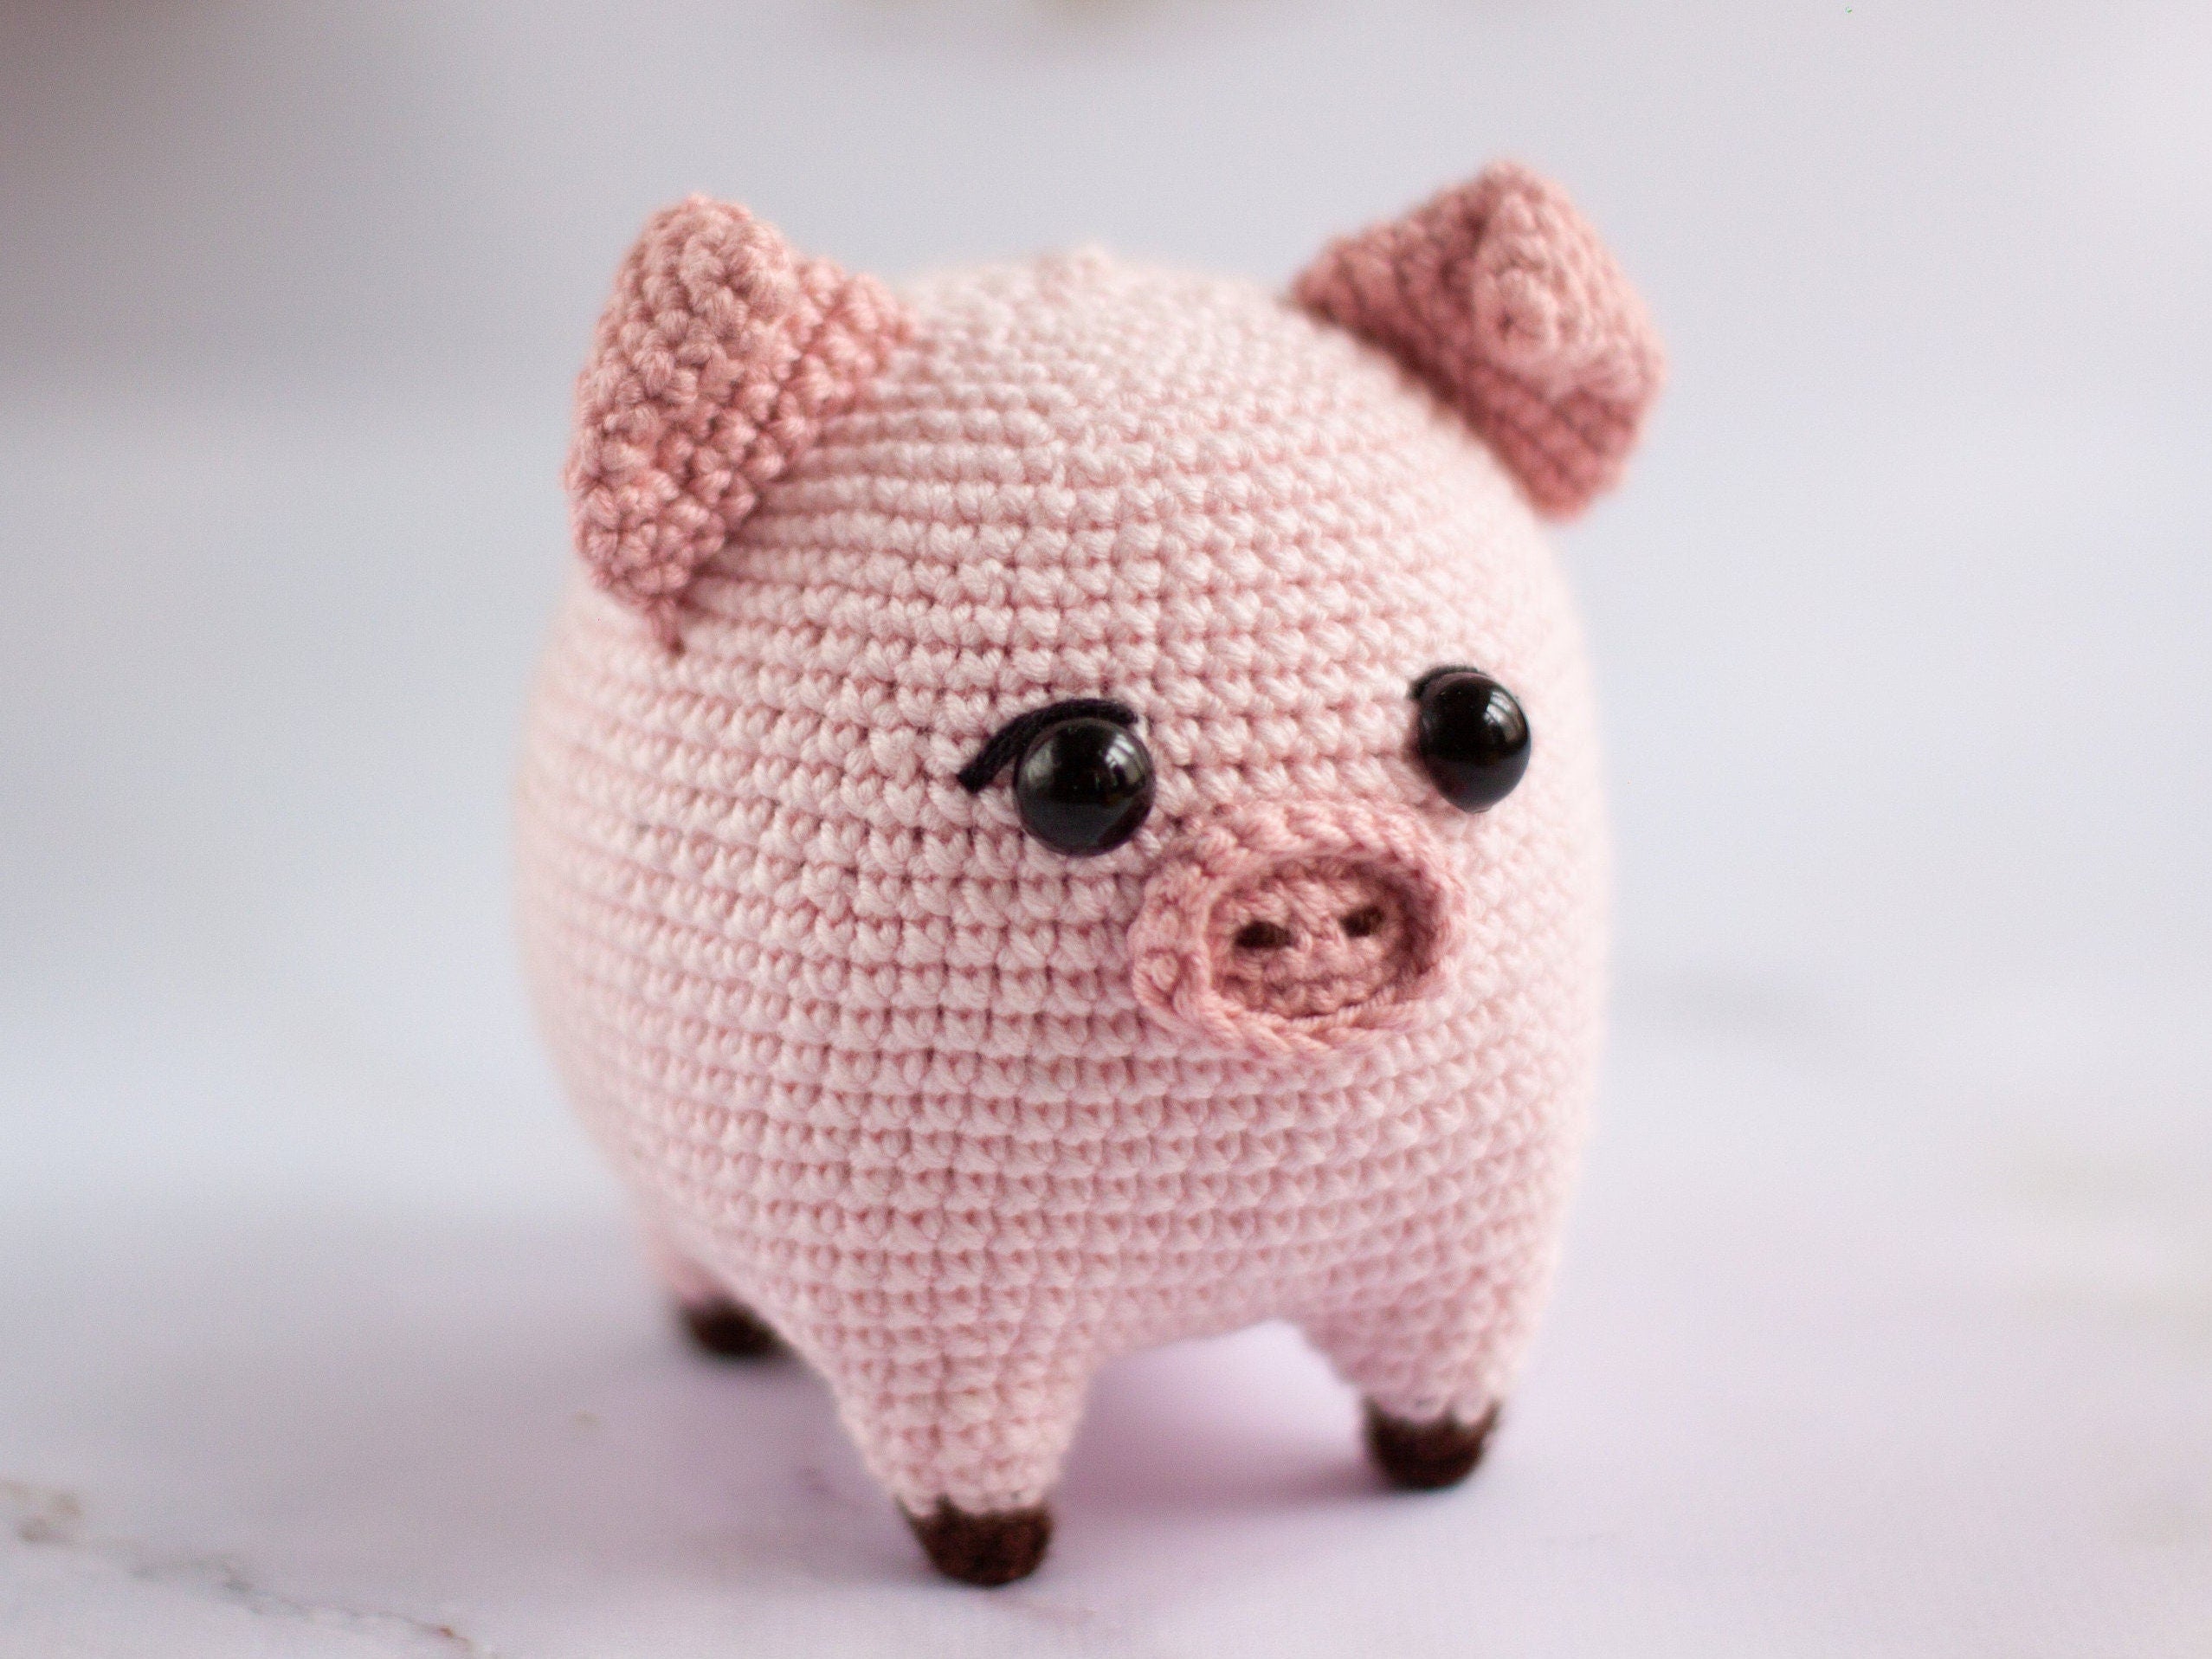 Crochet patterns amigurumi Piglet farm animal PDF / Instant Download tutorial